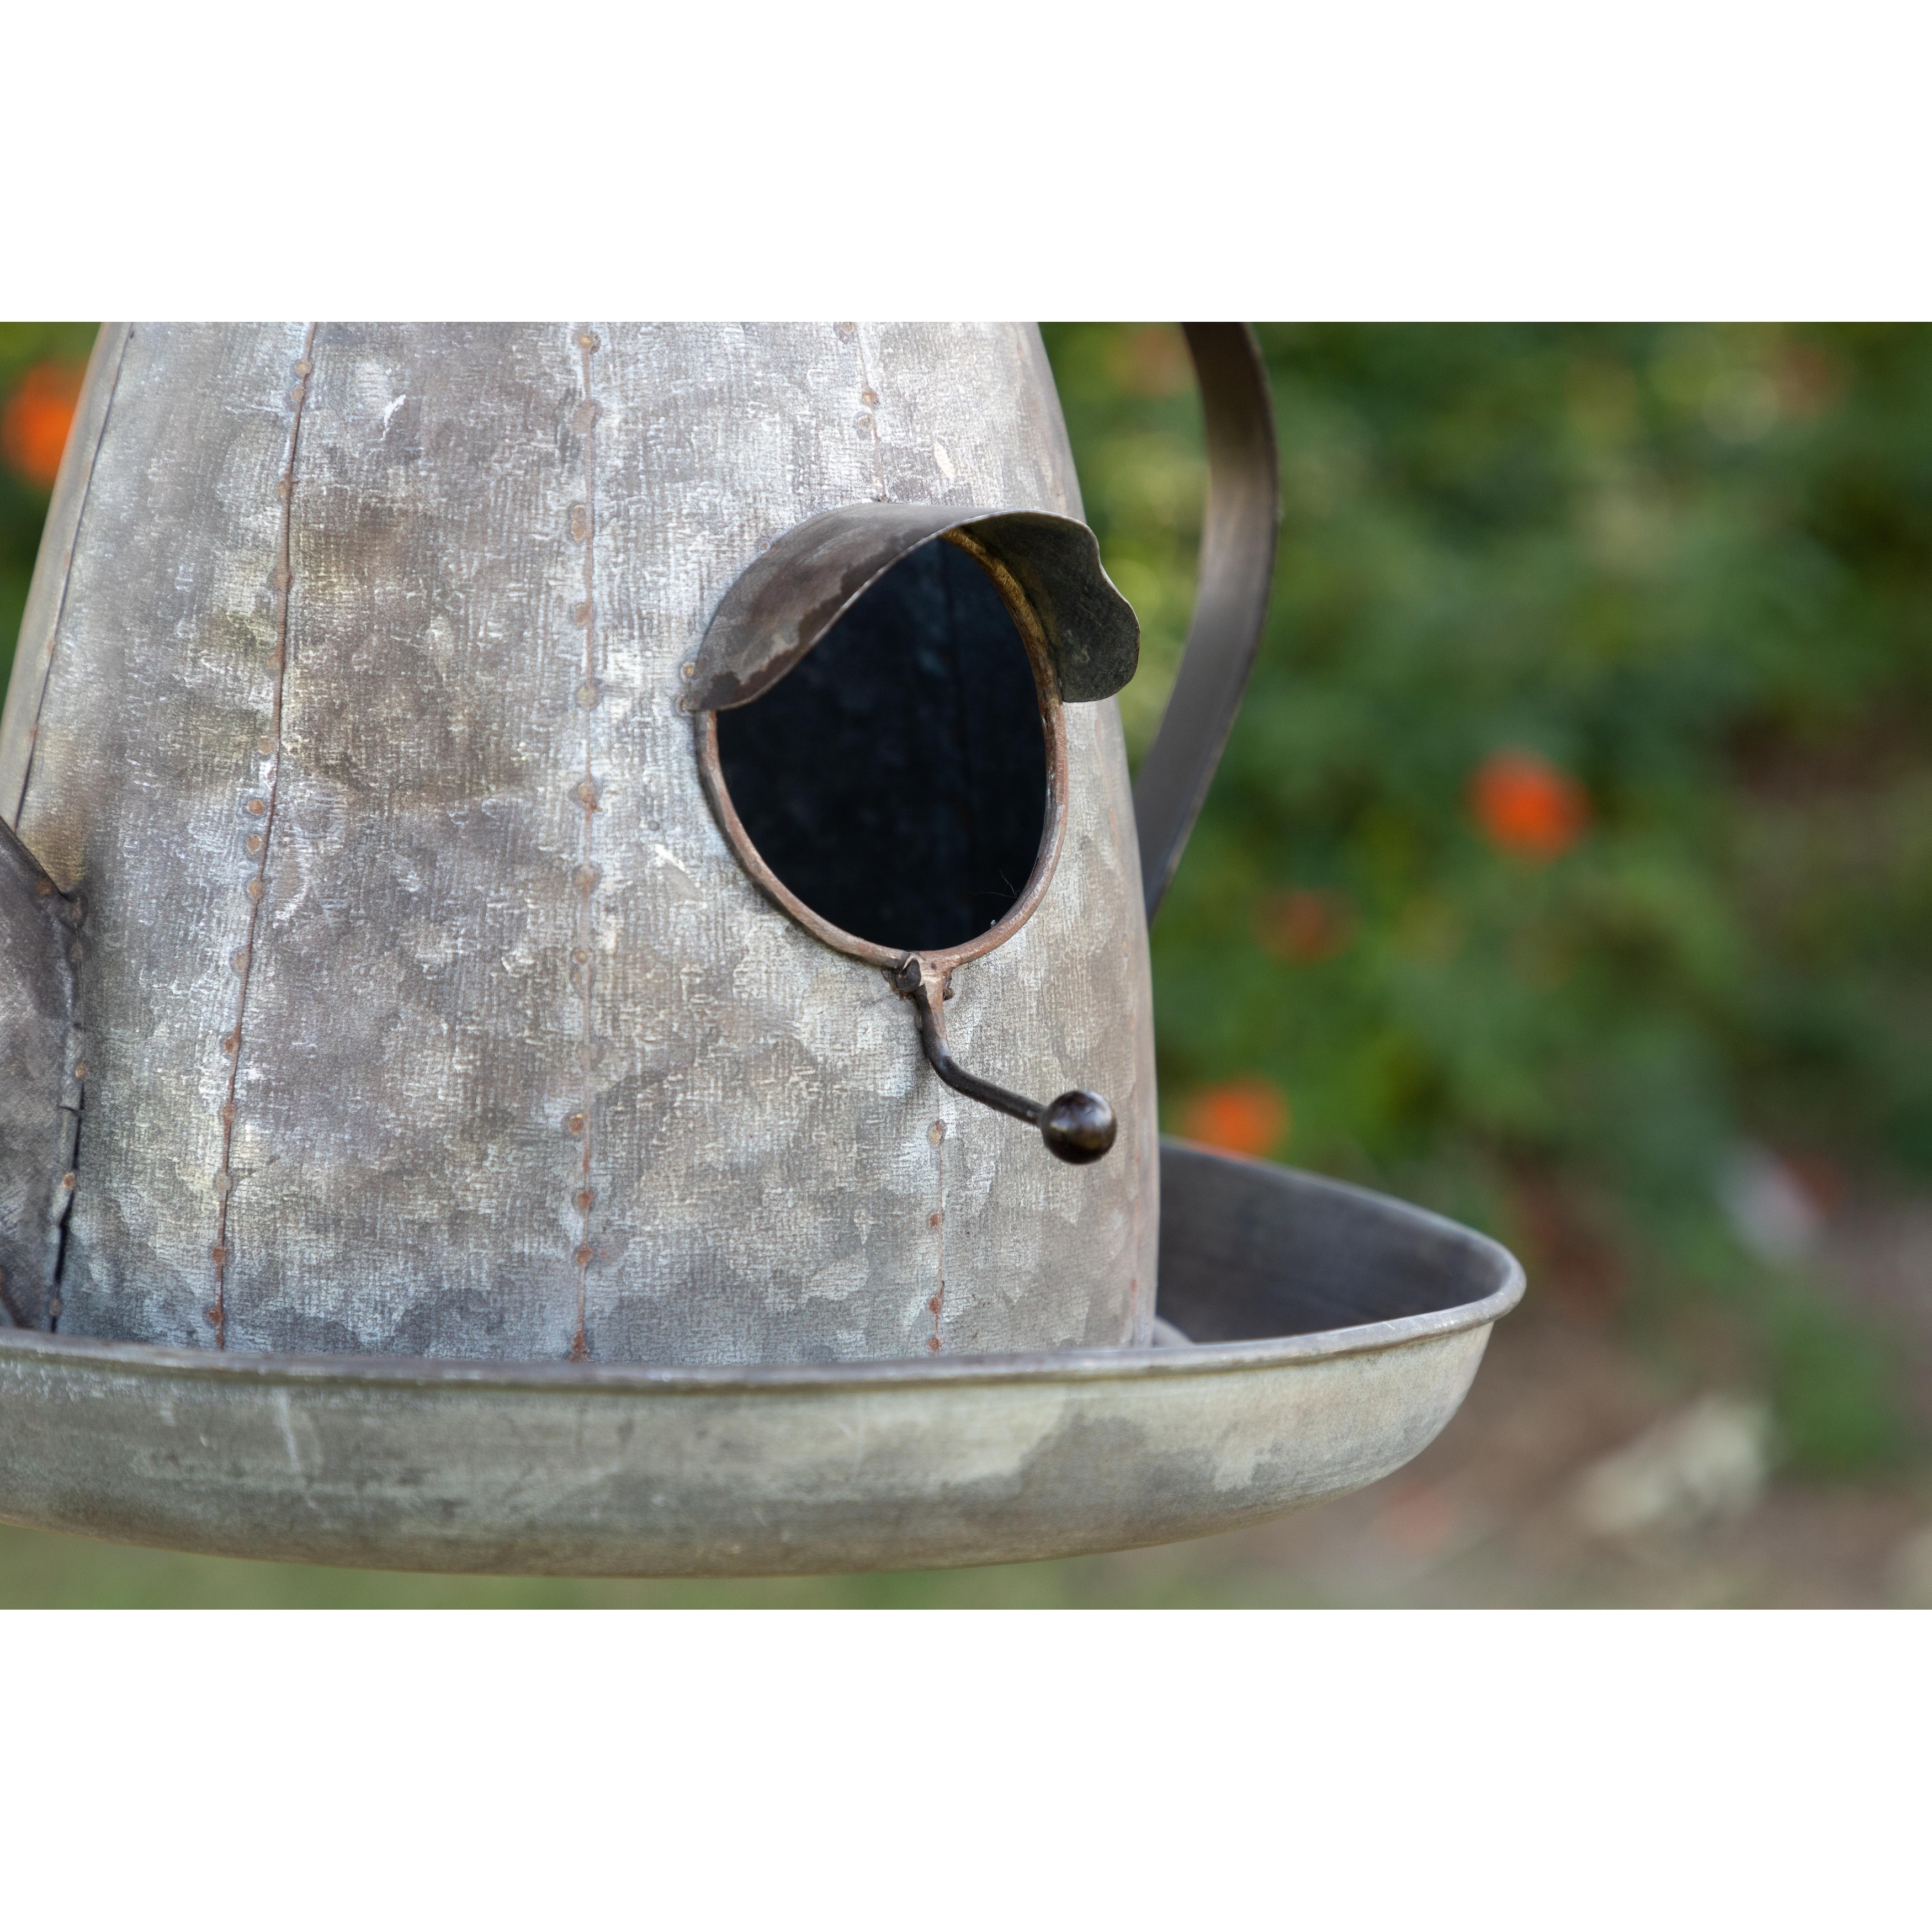 Alpine Metal Tea Pot Birdhouse, 20 Inch Tall - Bed Bath & Beyond - 25437051